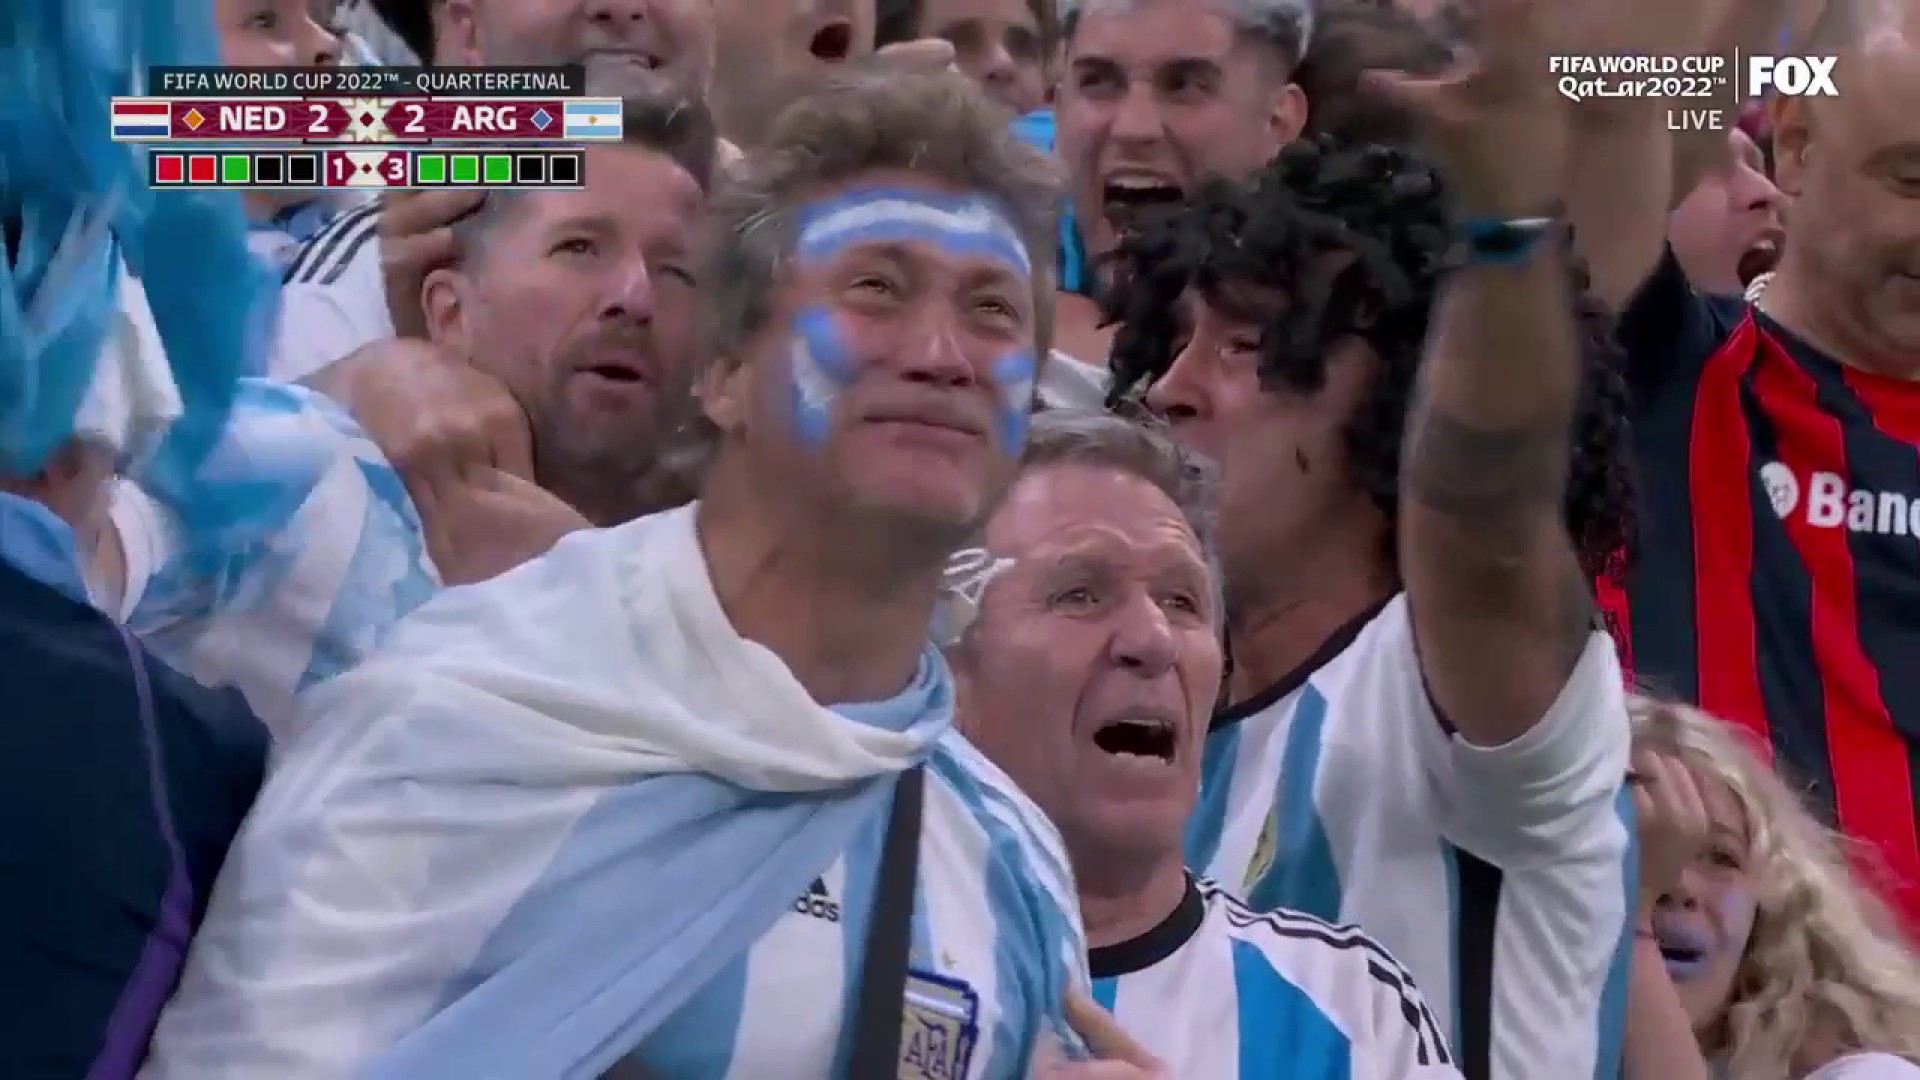 THREE FOR ARGENTINA

Netherlands: ❌❌✅
Argentina: ✅✅✅”